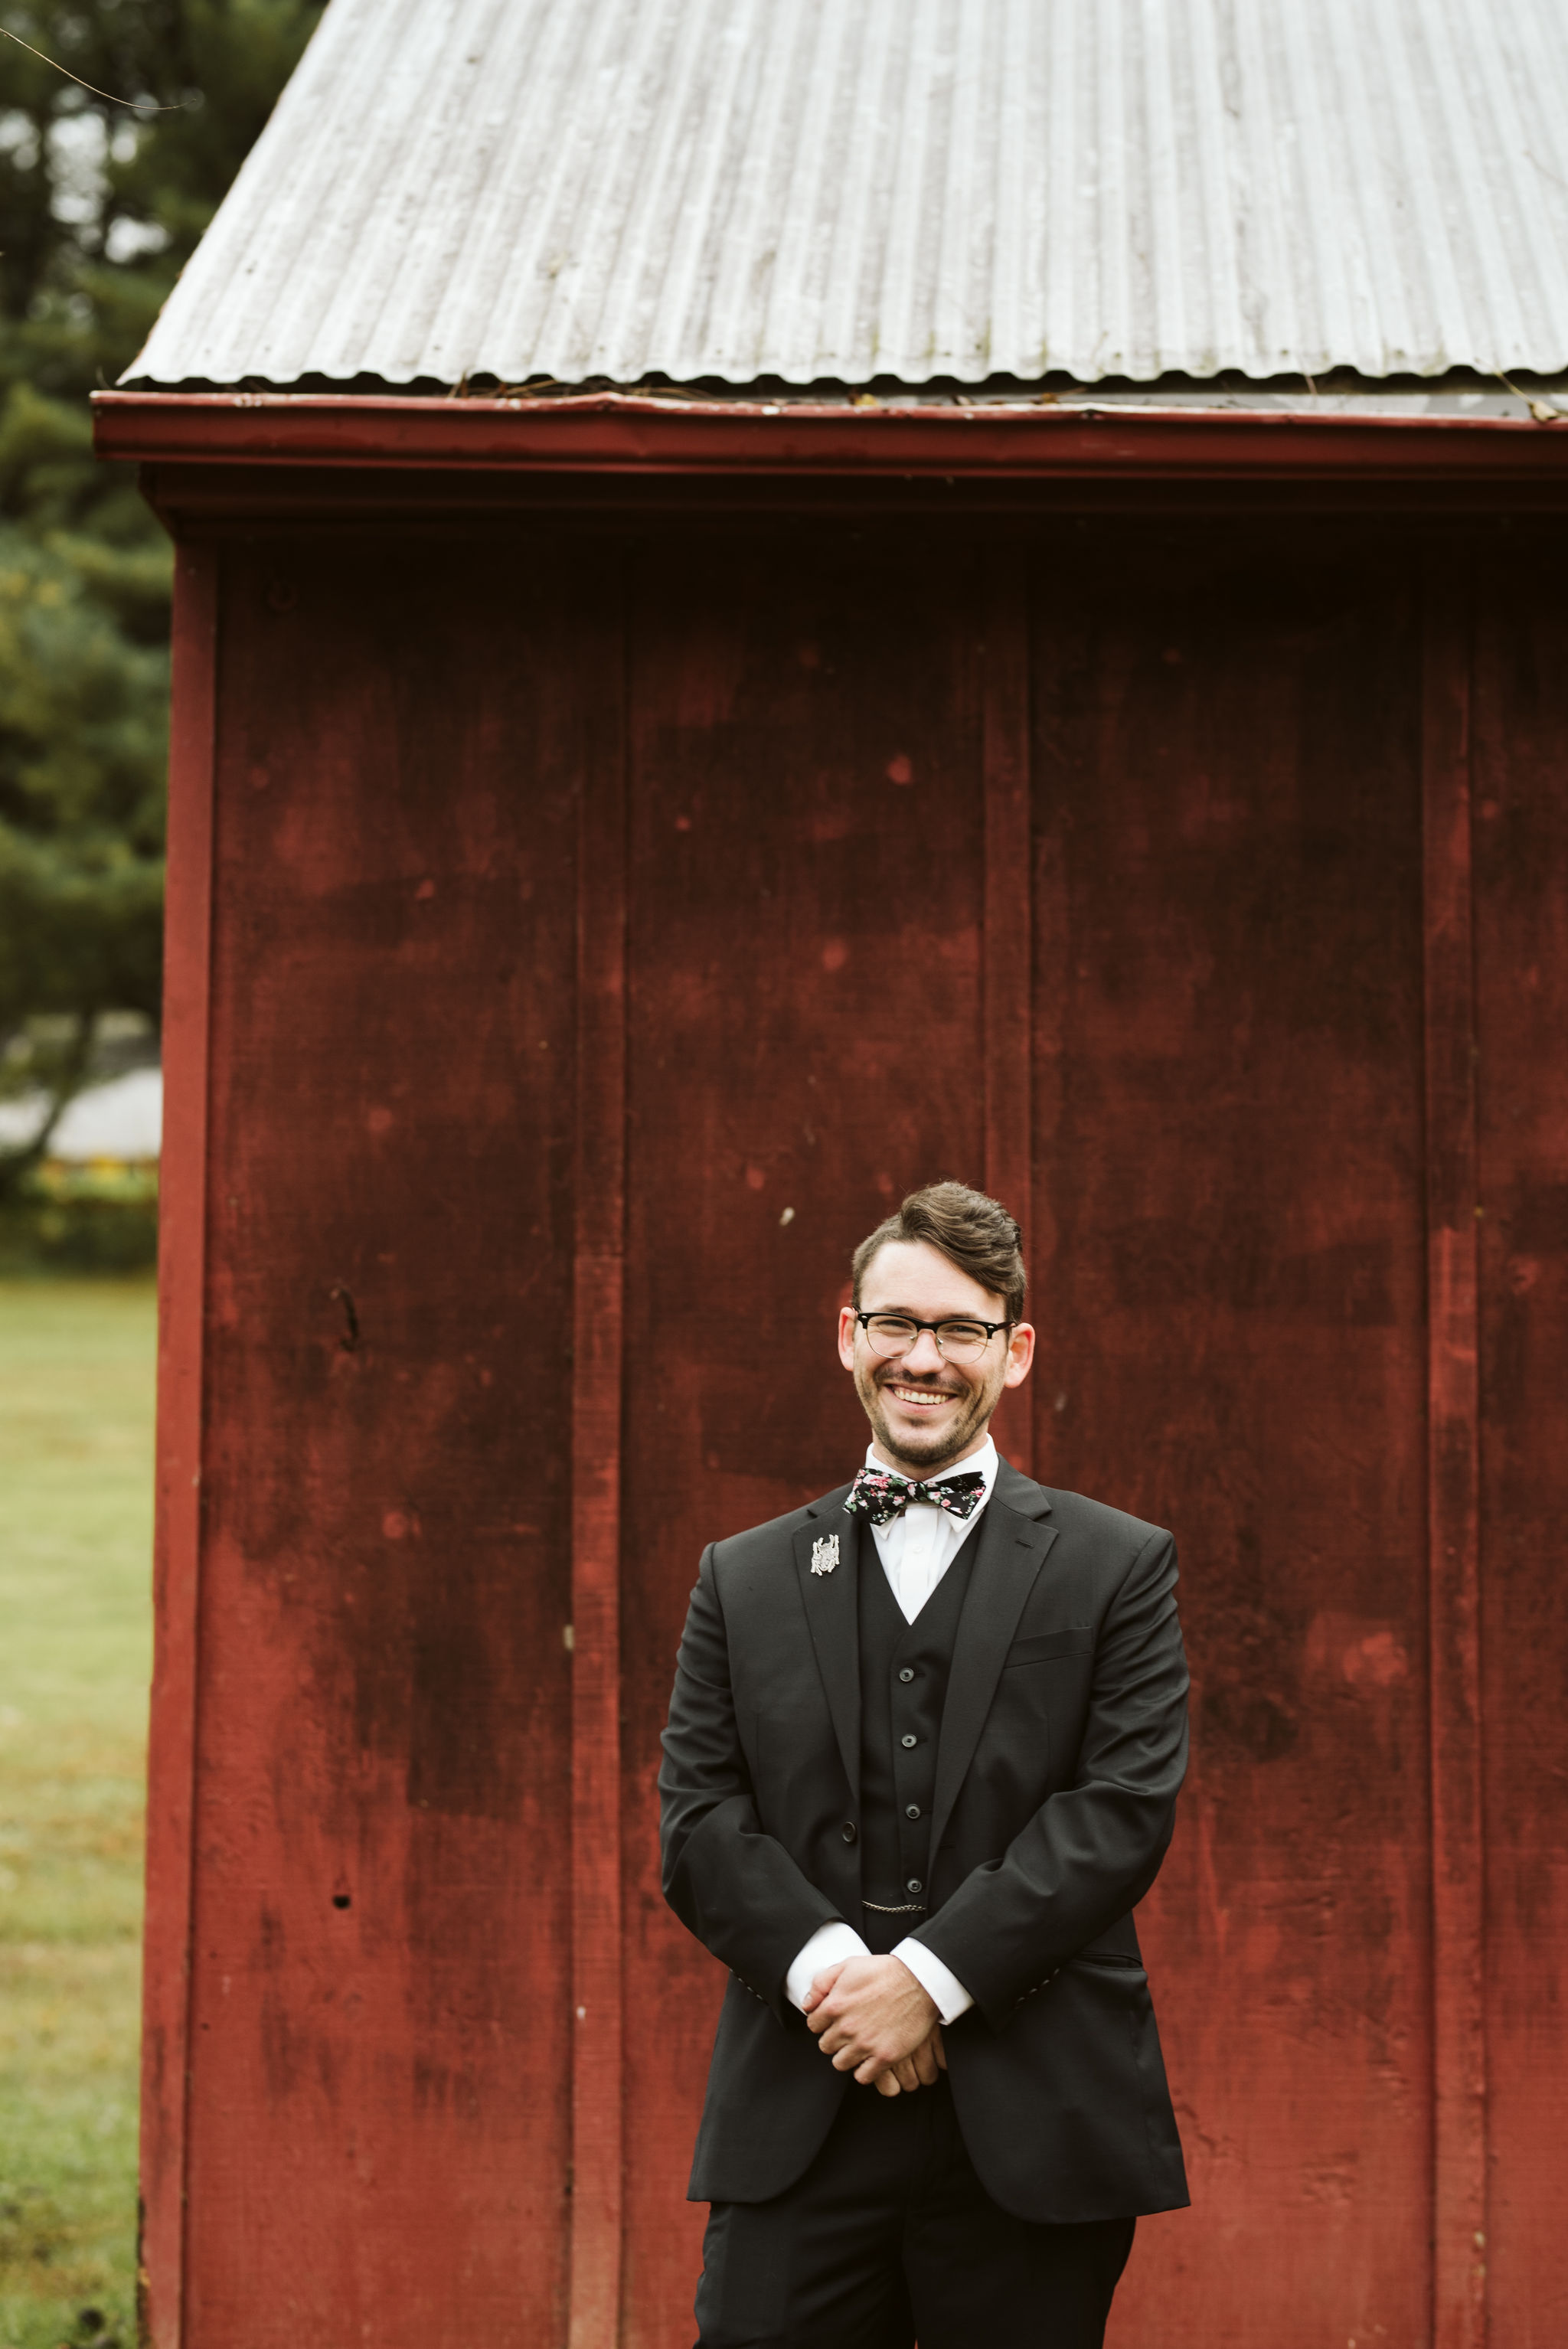  Maryland, Baltimore Wedding Photographer, Backyard Wedding, Fall, October, Dark Bohemian, Whimsical, Fun, Portrait of Groom Smiling Outside 